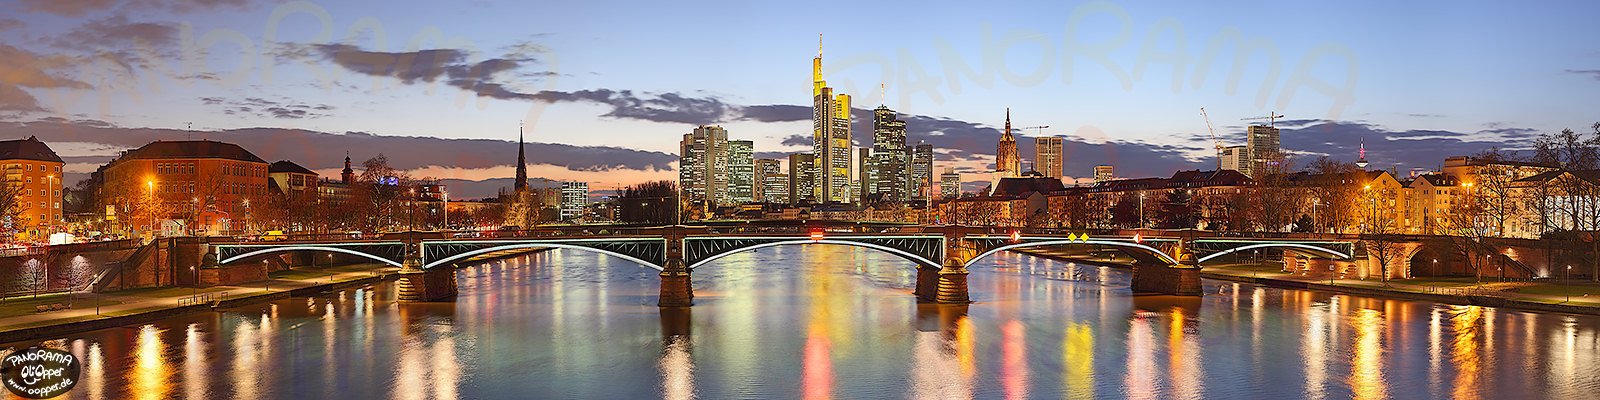 Frankfurt Skyline - p438 - (c) by Oliver Opper